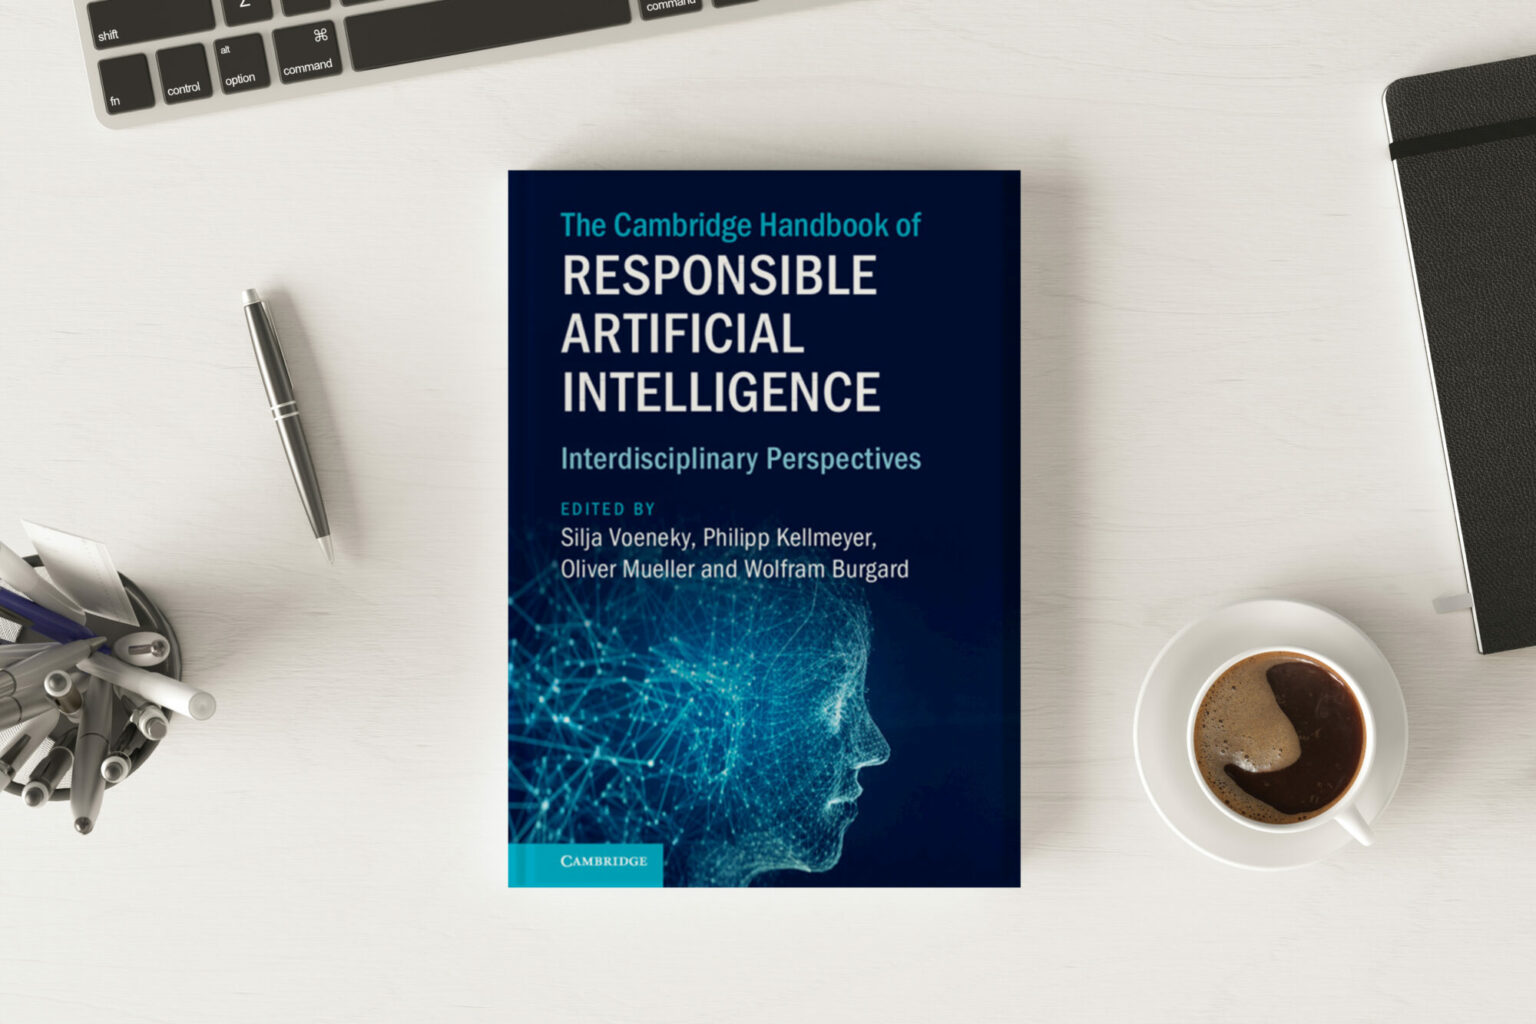 The Cambridge Handbook of Responsible Artificial Intelligence – Interdisciplinary Perspectives